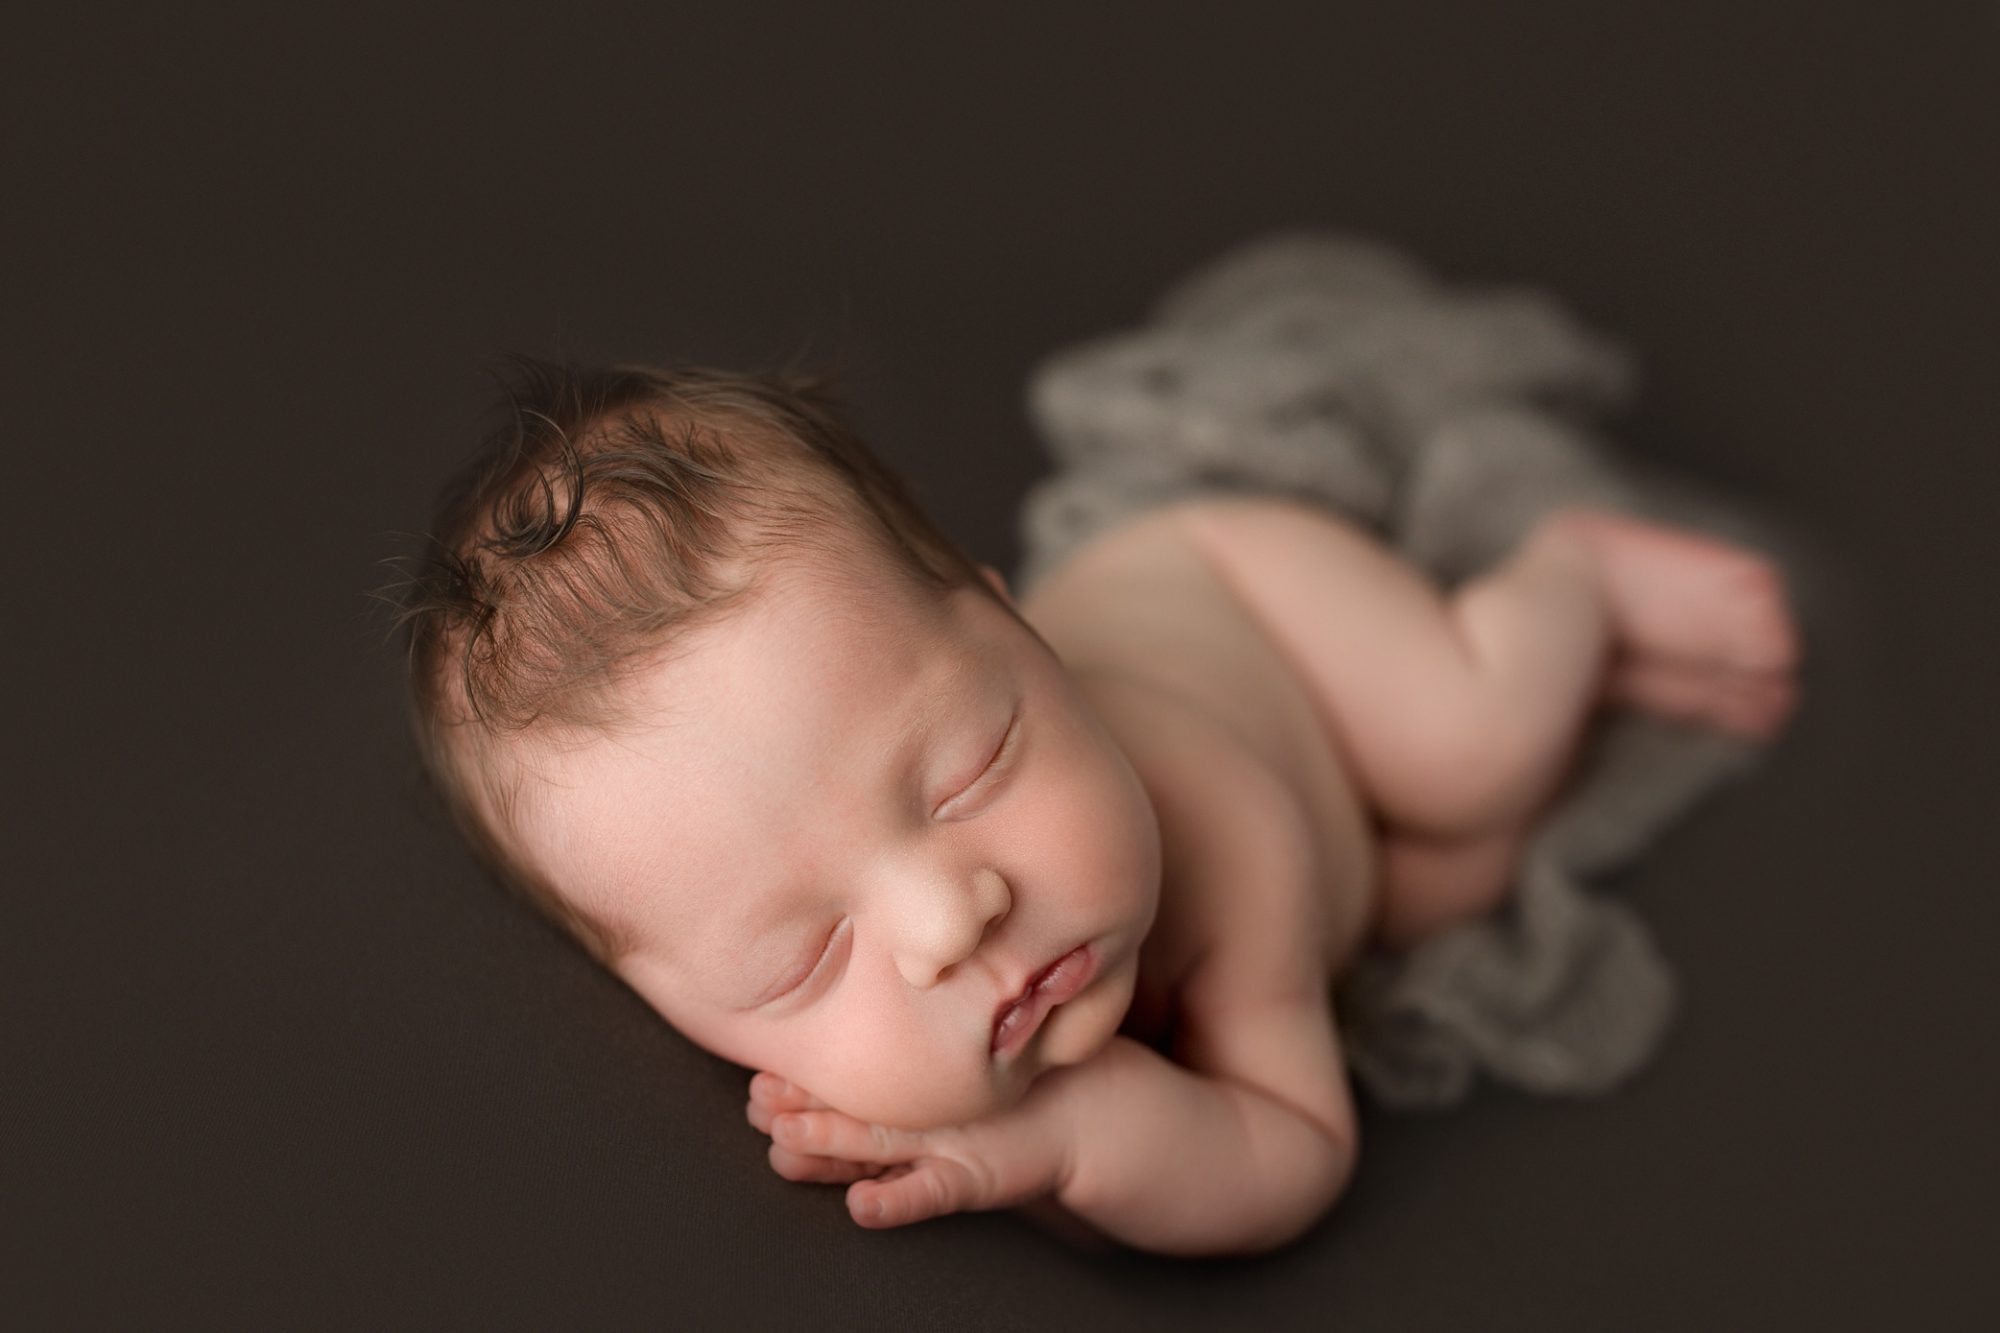 puyallup baby photographer | newborn photography puyallup | tacoma newborn baby photographer